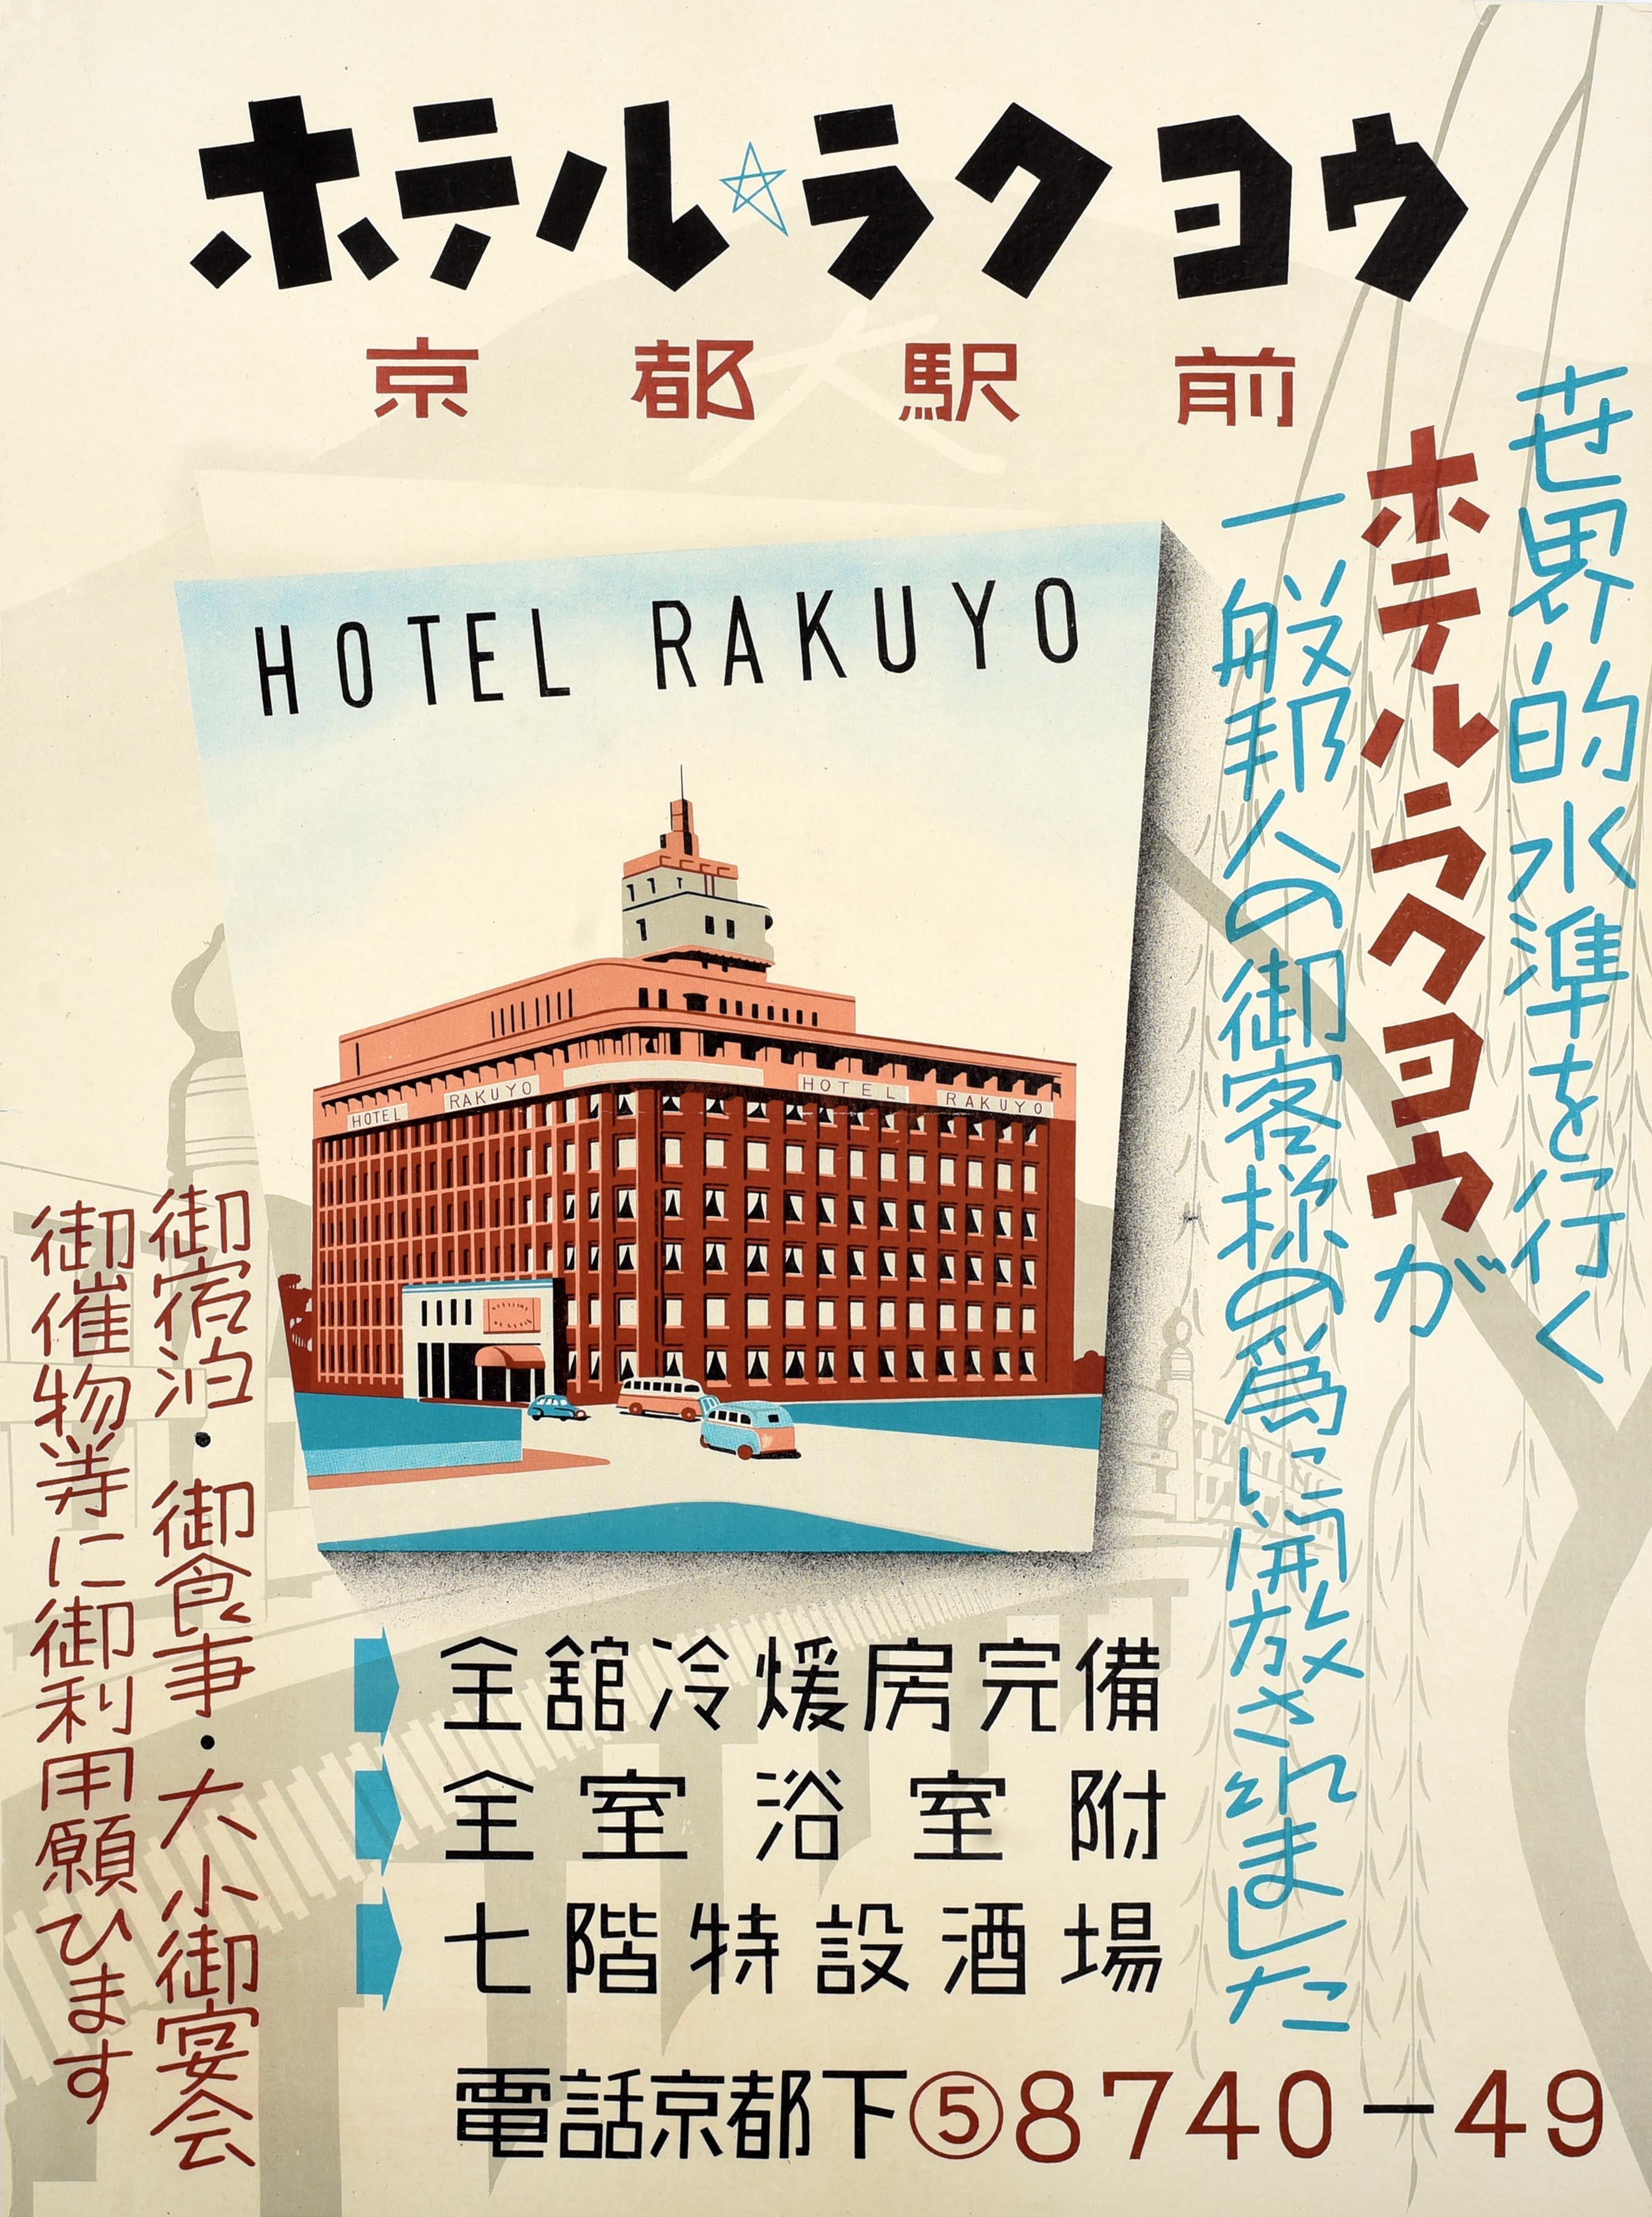 Unknown Print - Original Vintage Japanese Travel Poster Hotel Rakuyo Kyoto Station Japan Asia